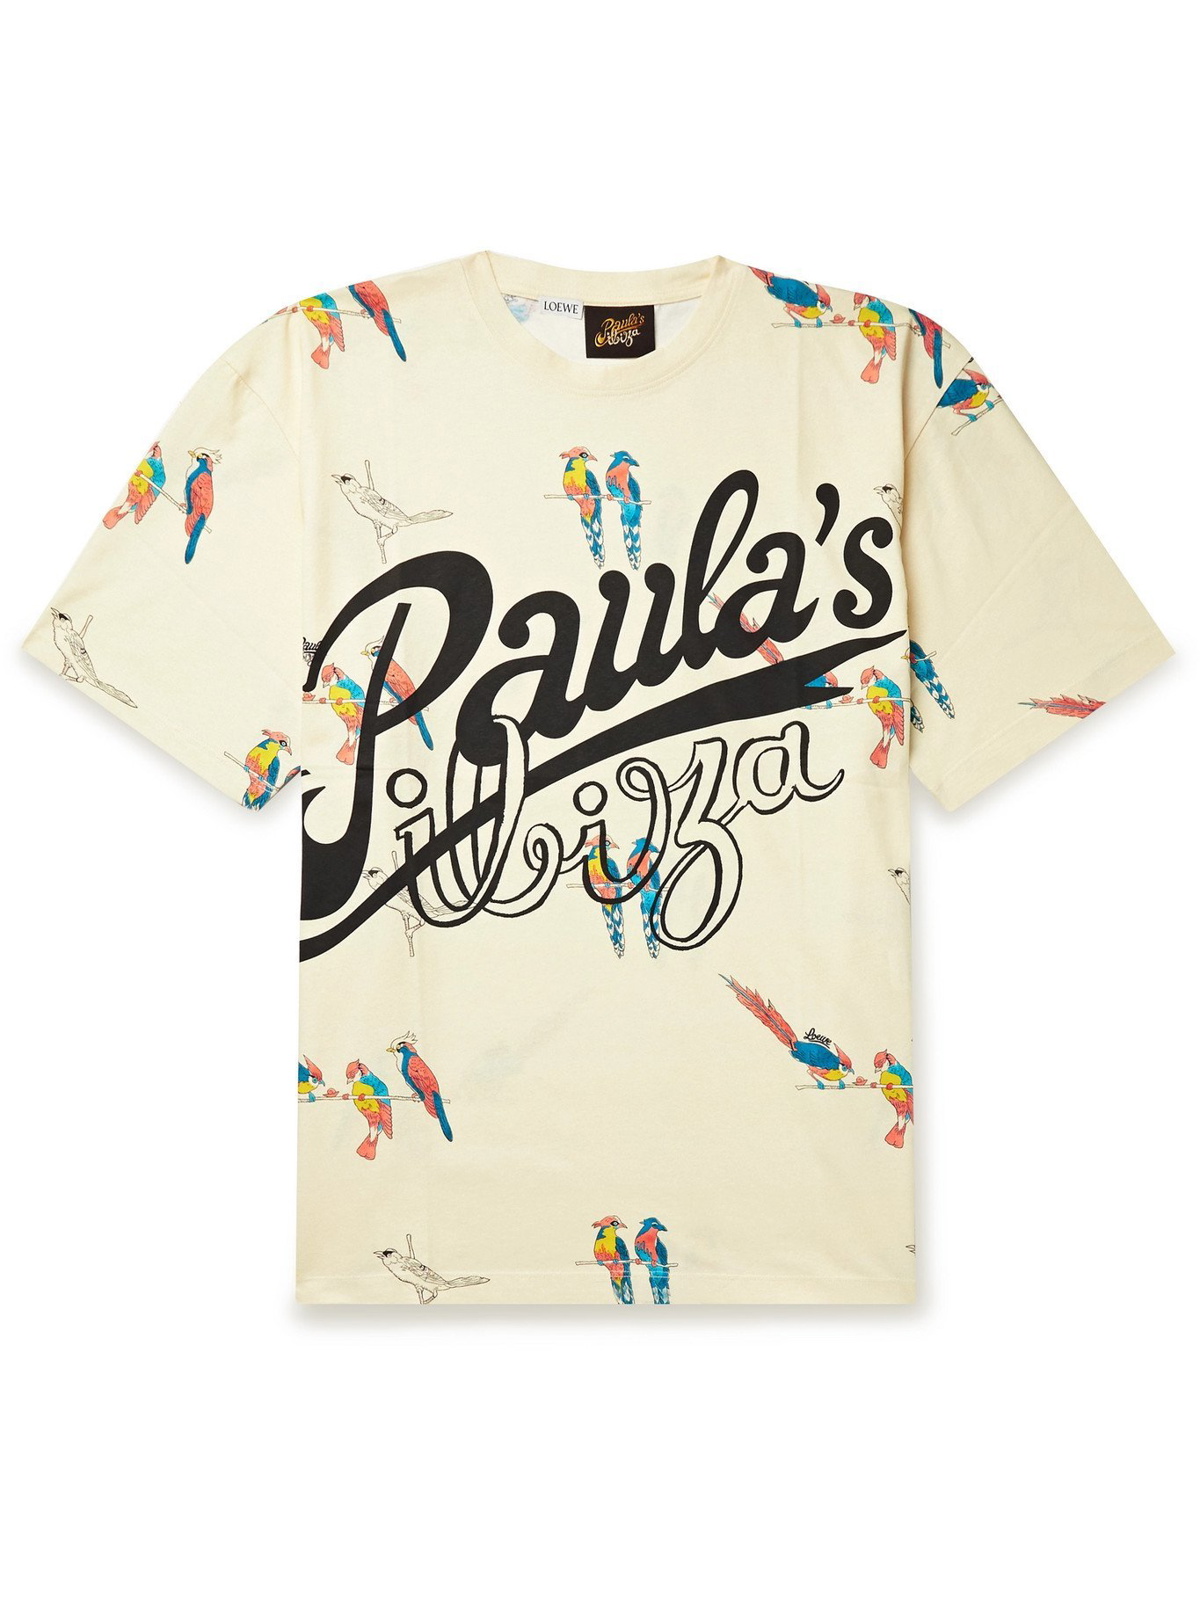 loewe paula's ibiza Tシャツファッション